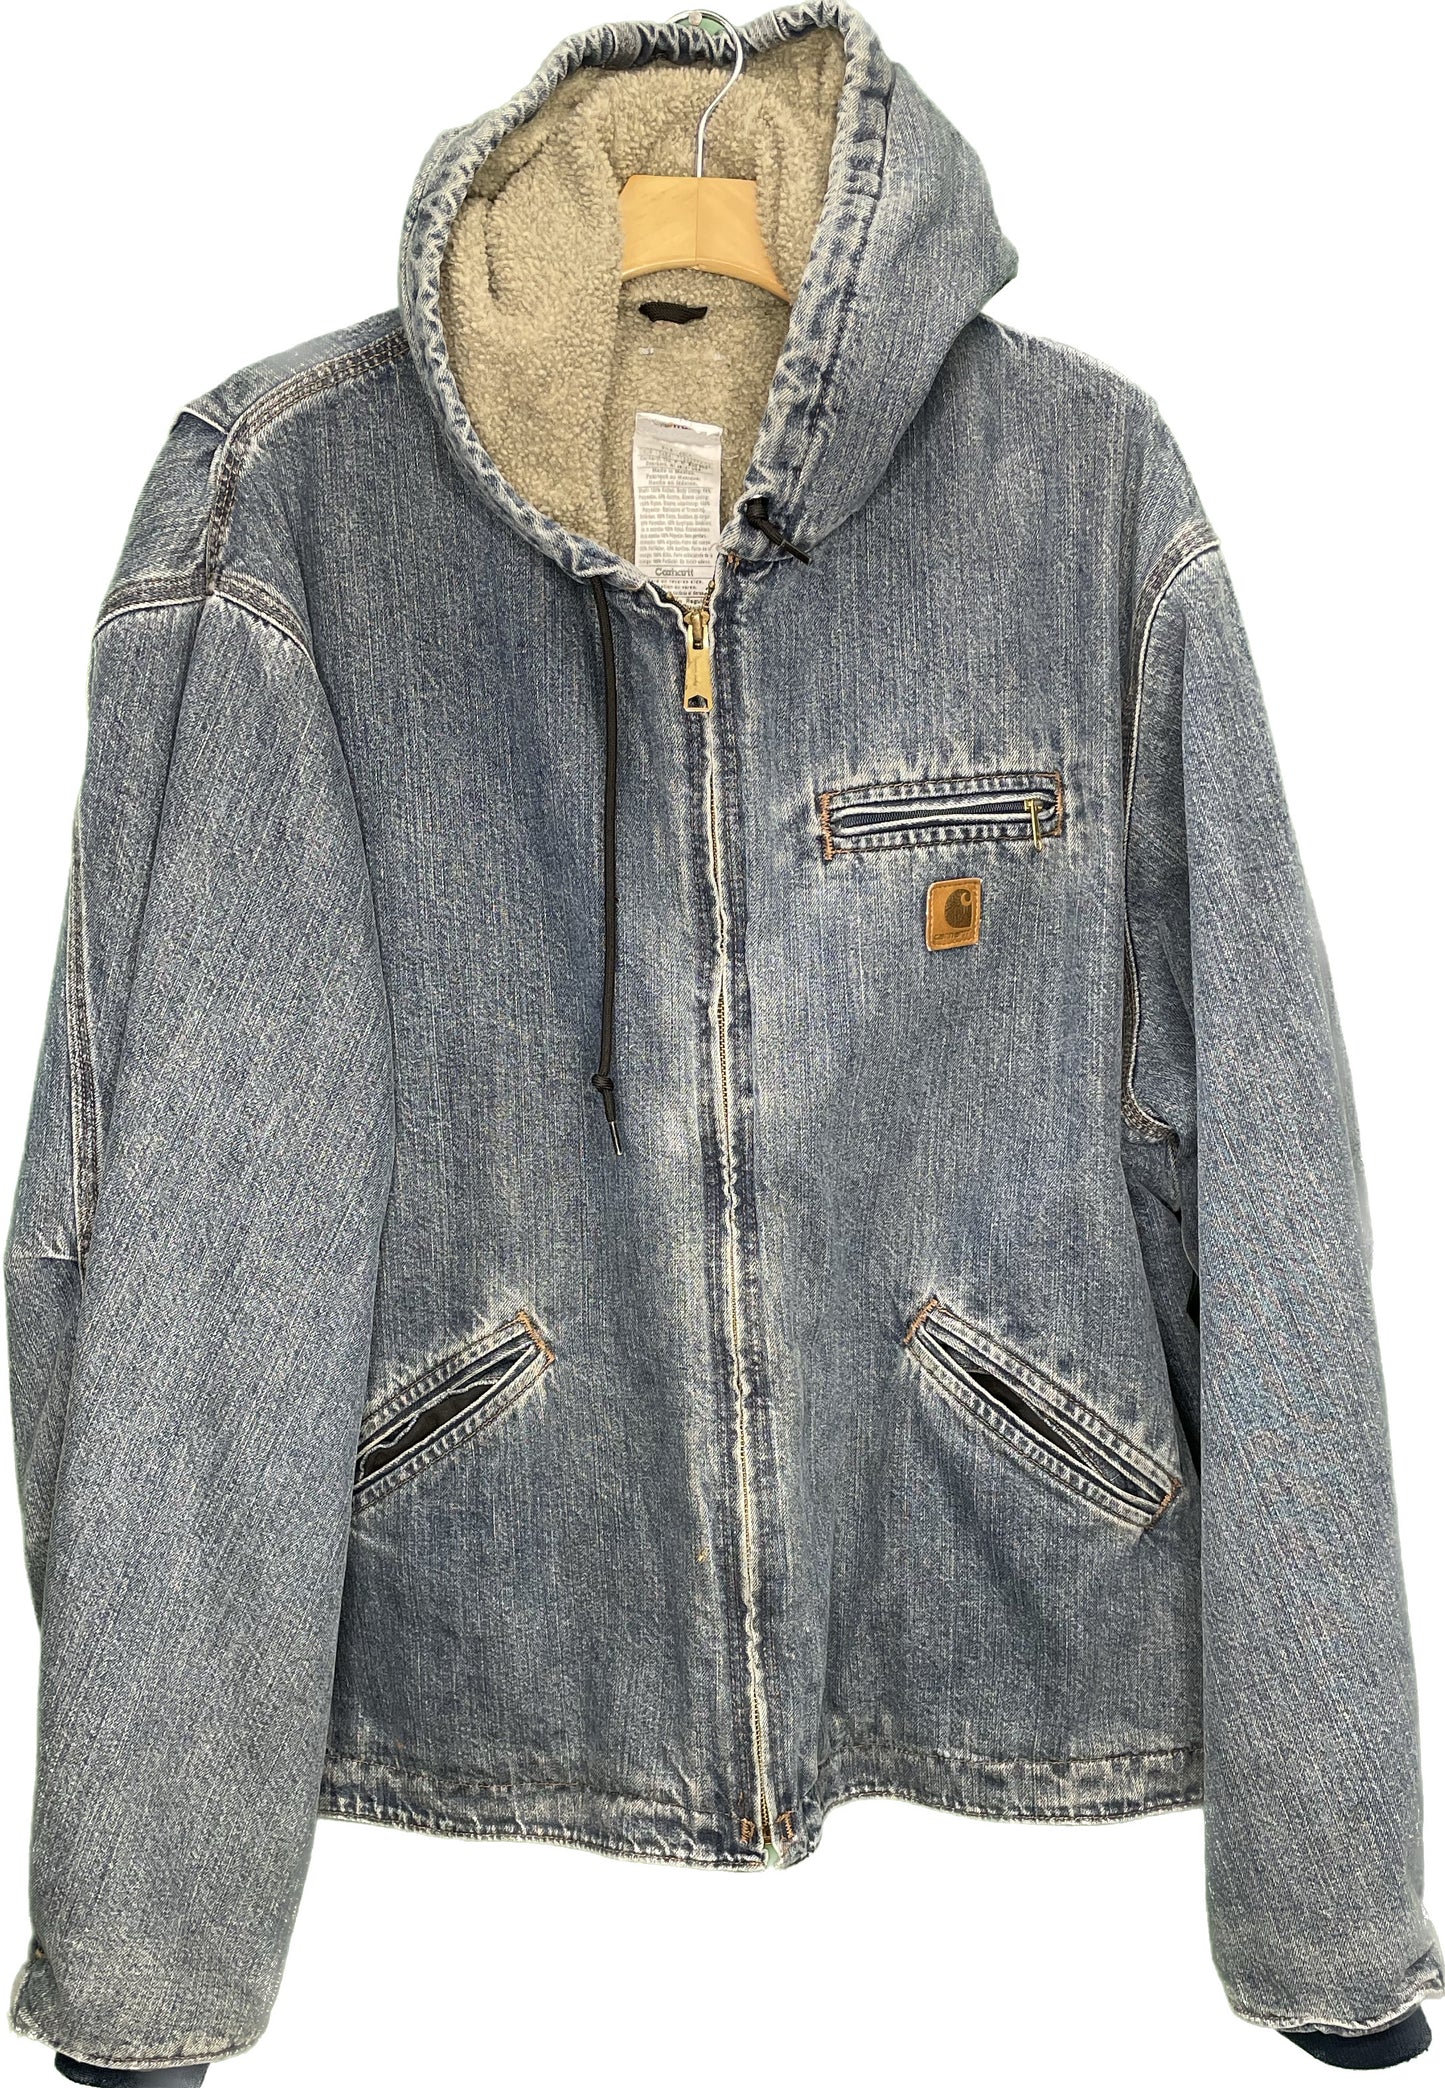 Vintage 3XL Sherpa Lined Hooded Carhartt Jacket